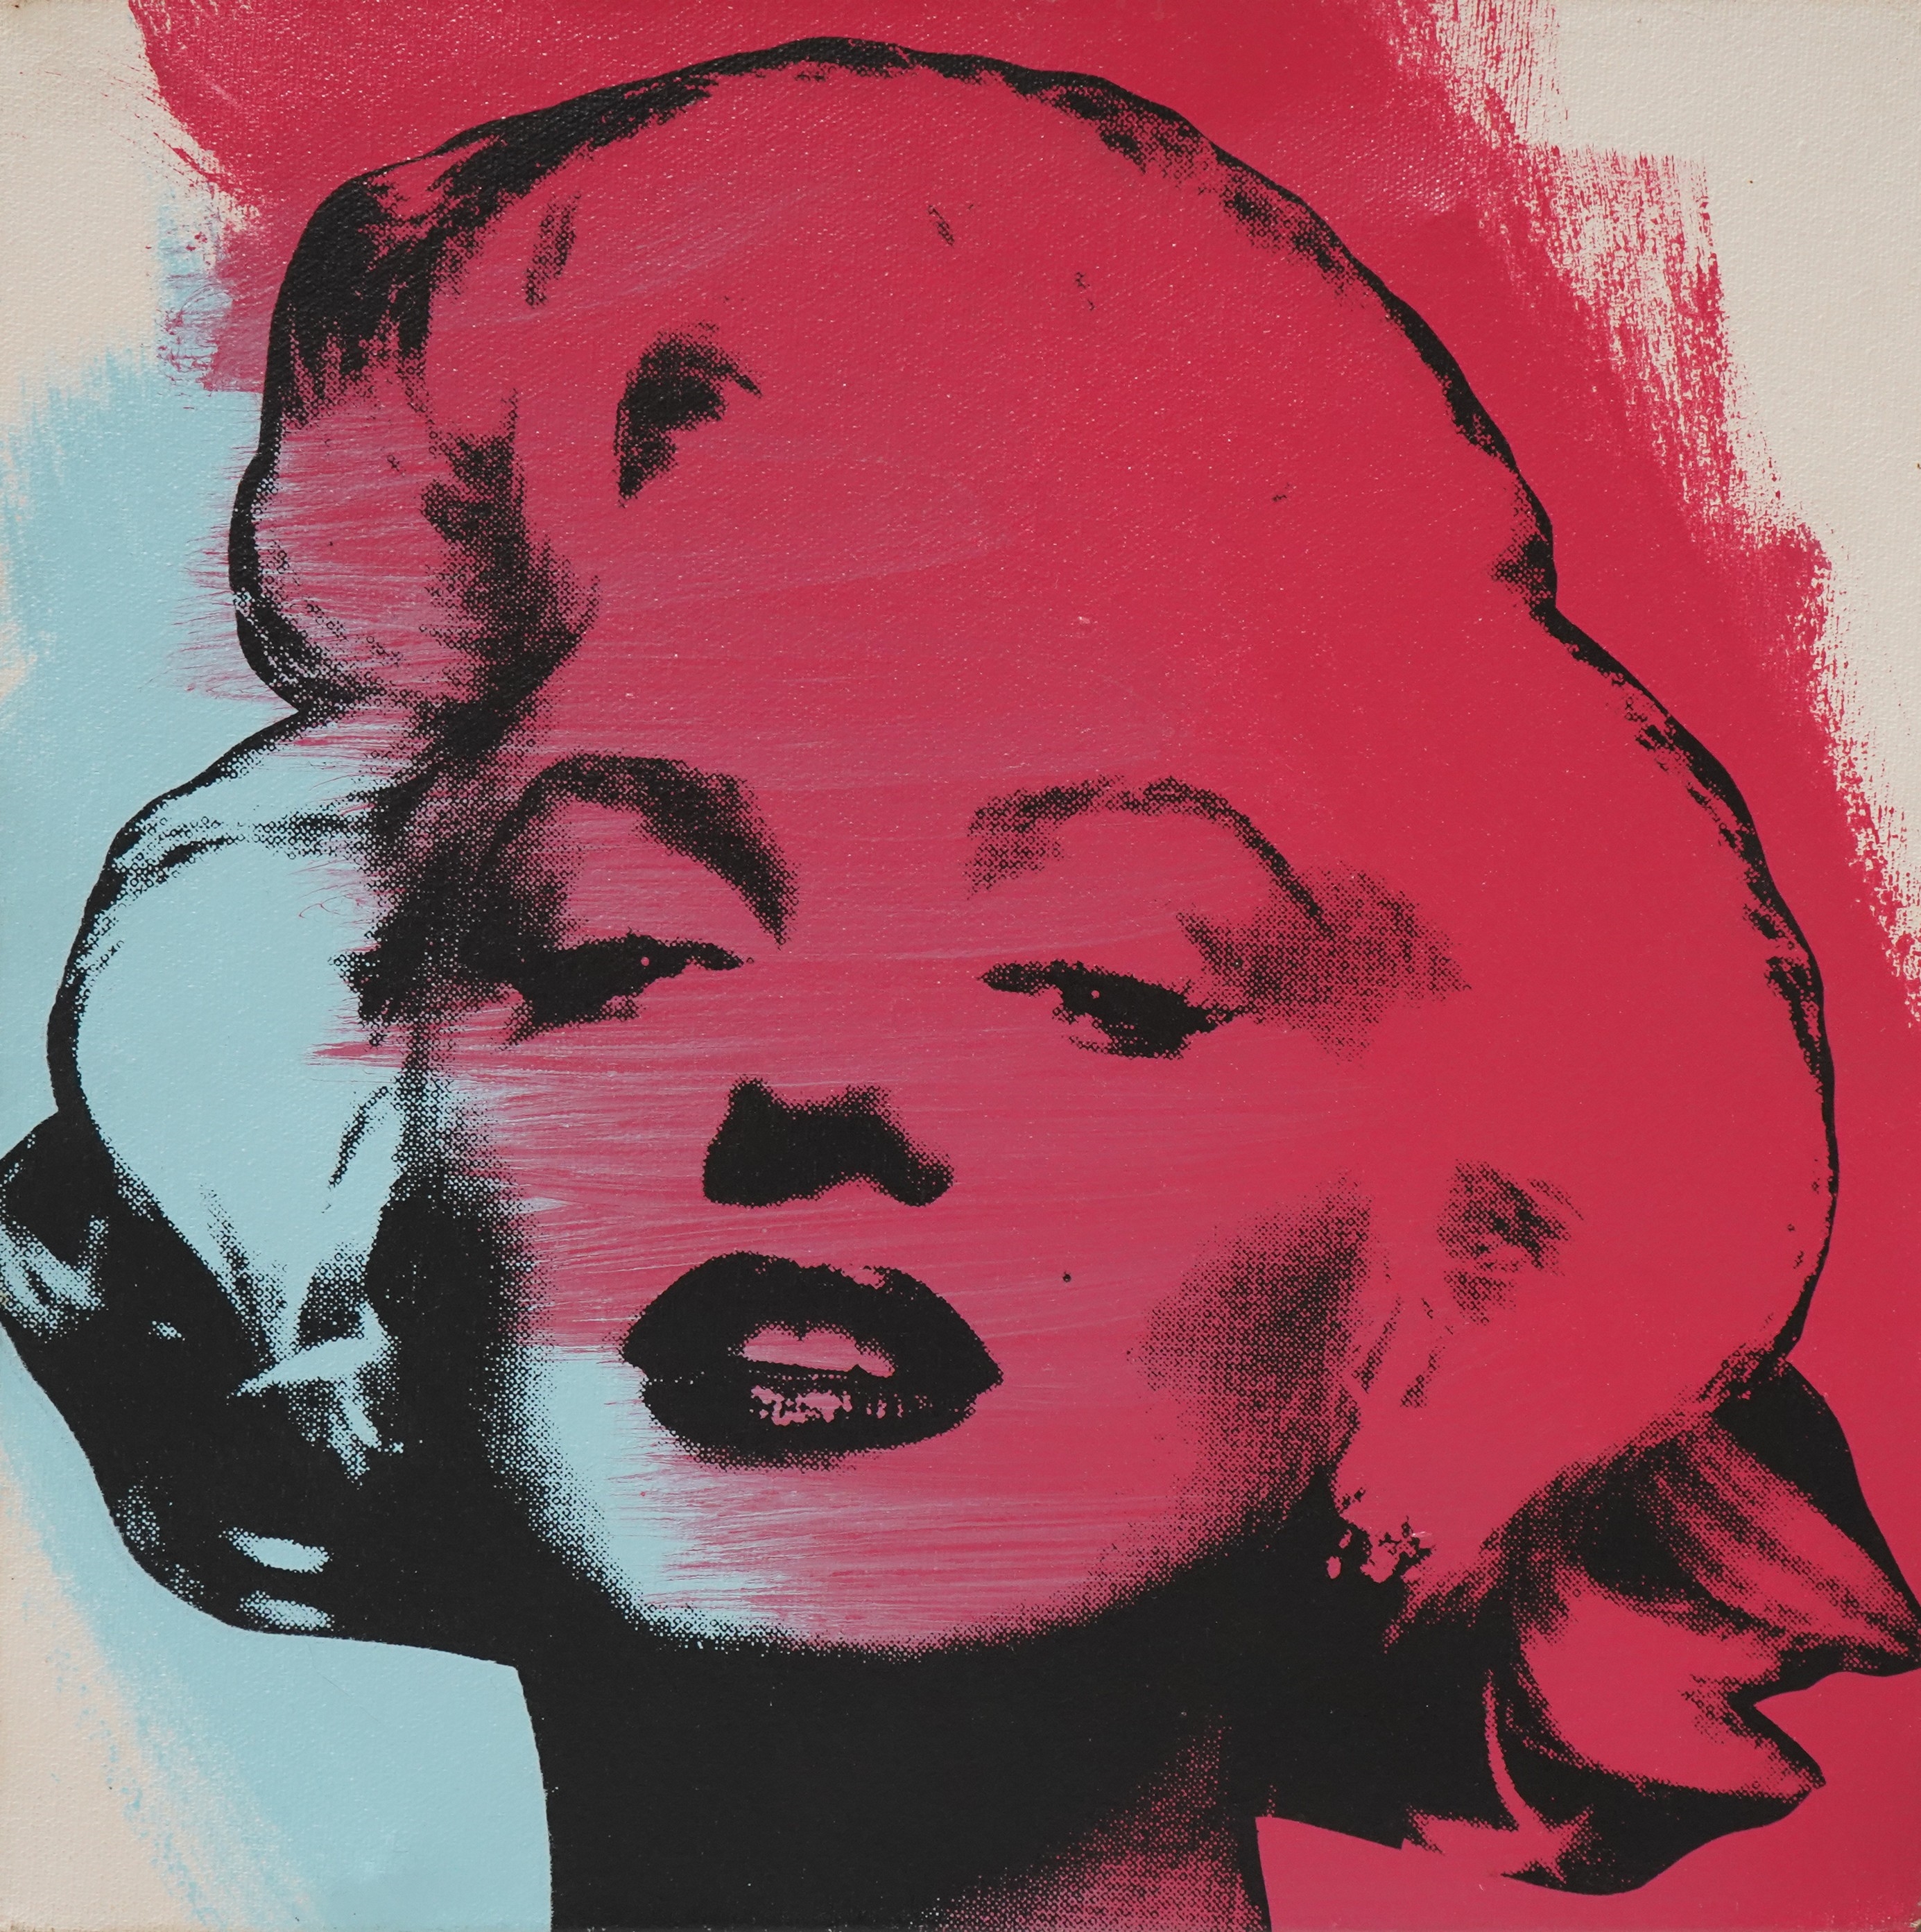 Steve Kaufman - Marilyn Monroe Louis Vuitton LV Oil Painting Purse